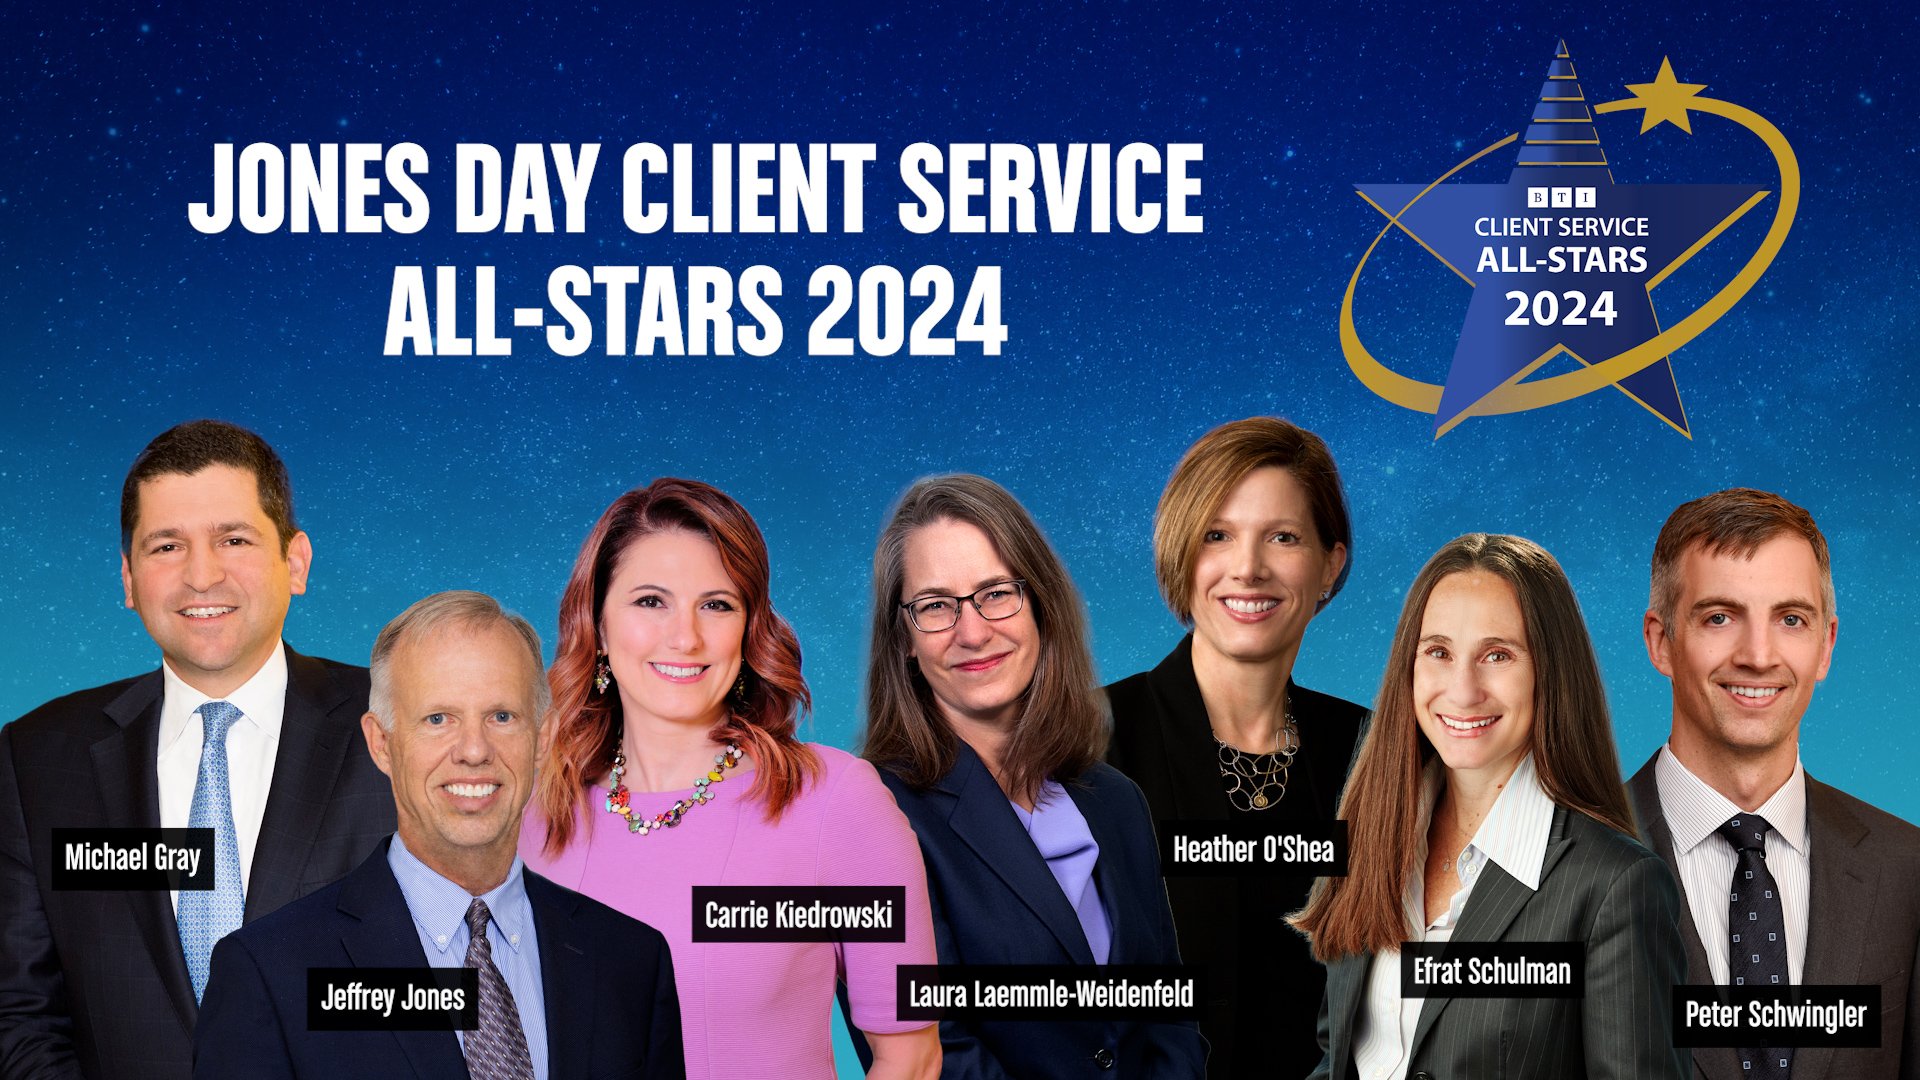 Jones Day Client Service All-Stars 2024